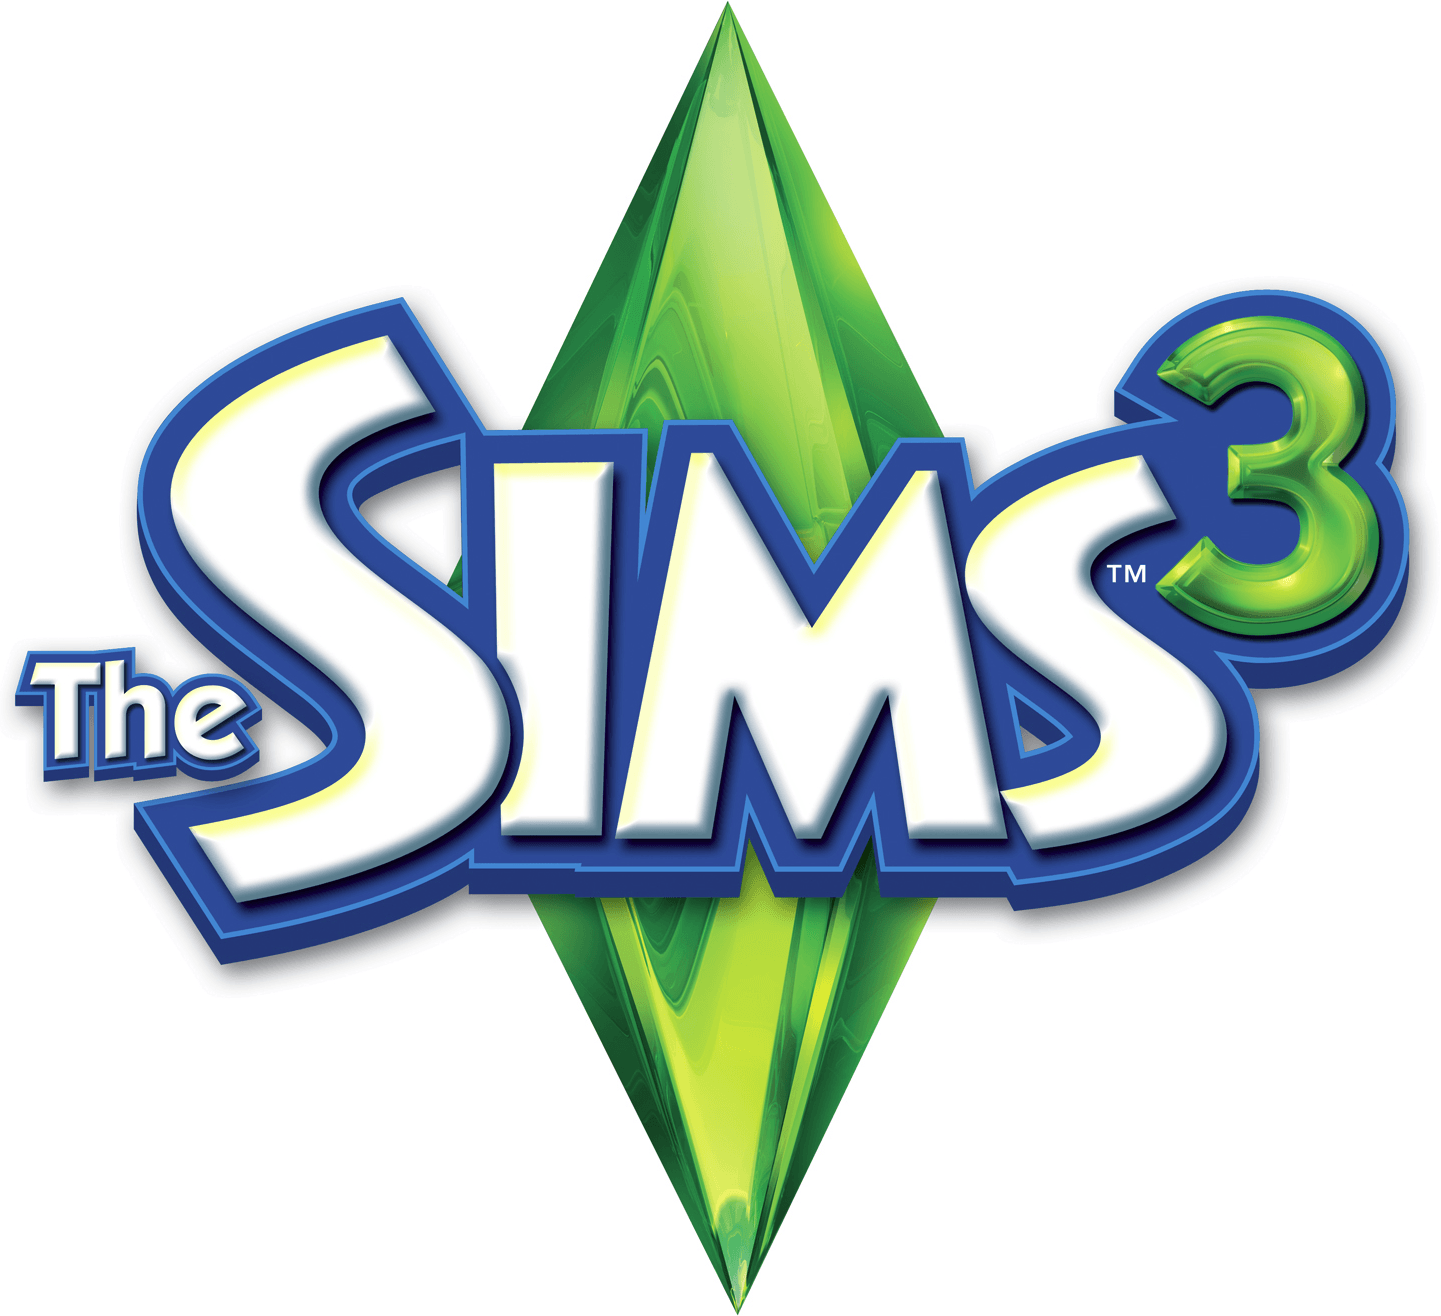 Sims 3 Logo - The Sims 3